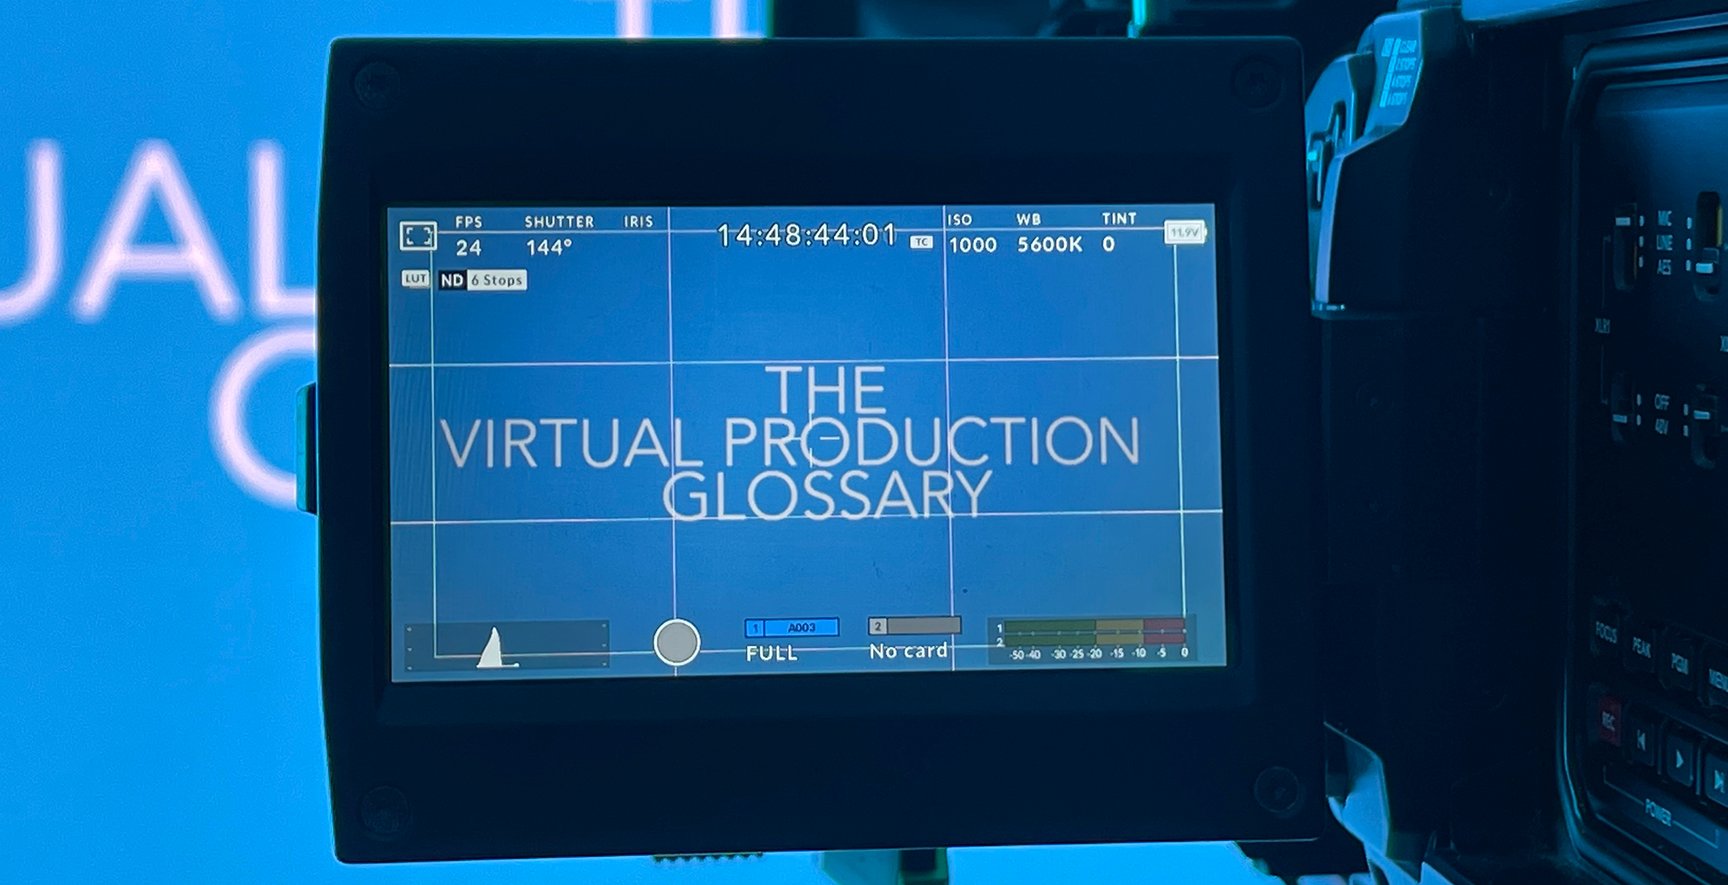 Virtual Production Glossary Image